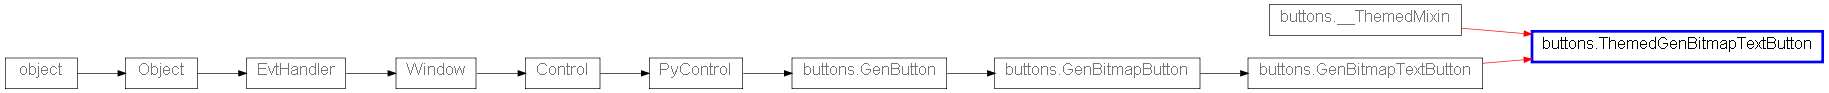 Inheritance diagram of ThemedGenBitmapTextButton